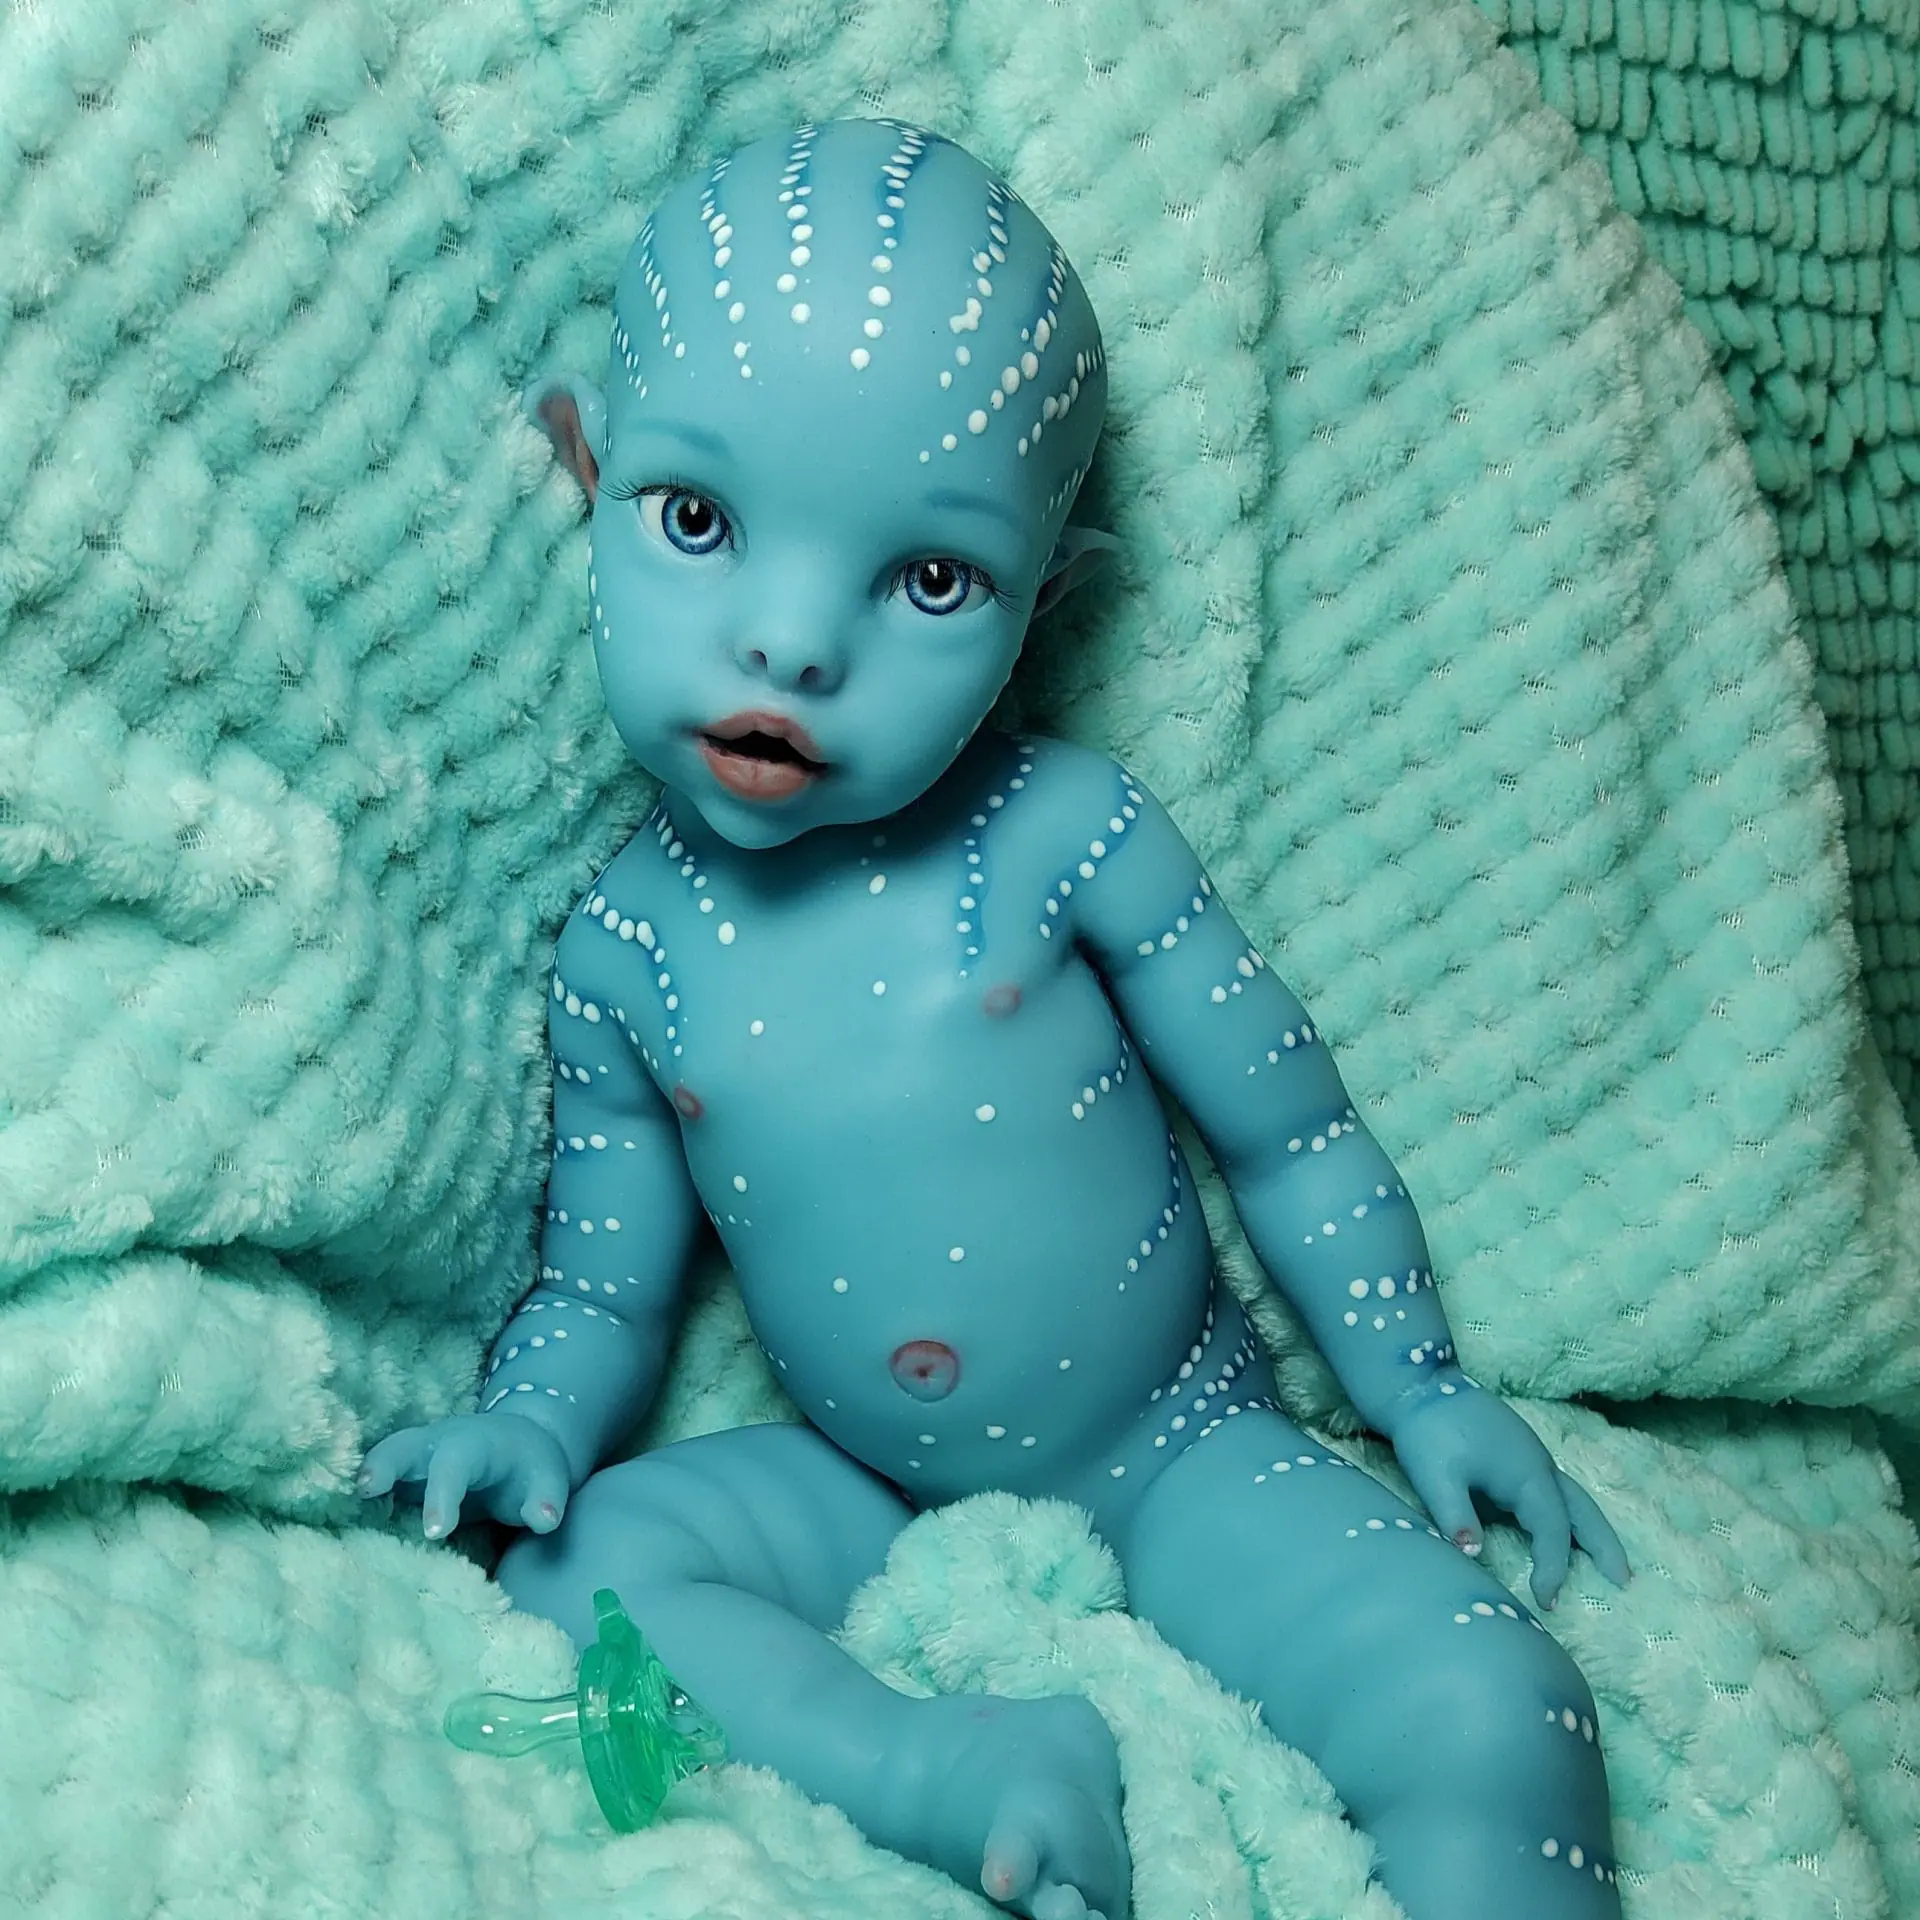 Pin on Baby doll azul